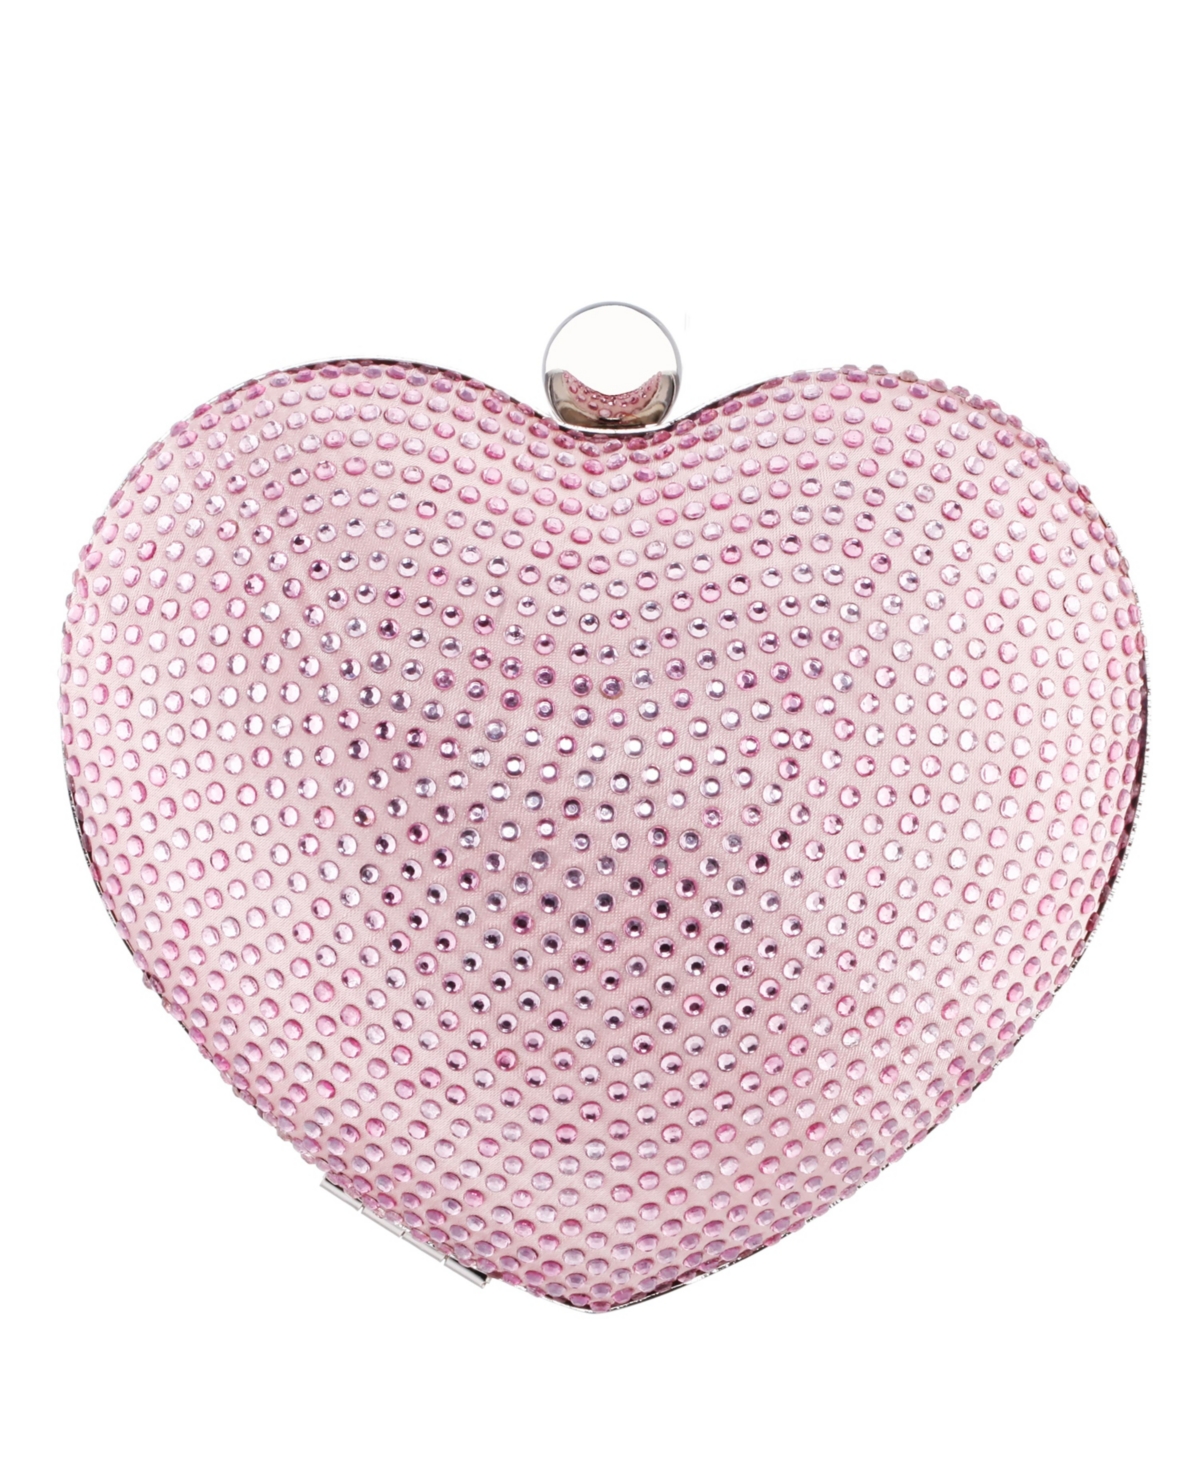 Nina Women's Crystal Heart Minaudiere Bag In Light Pink